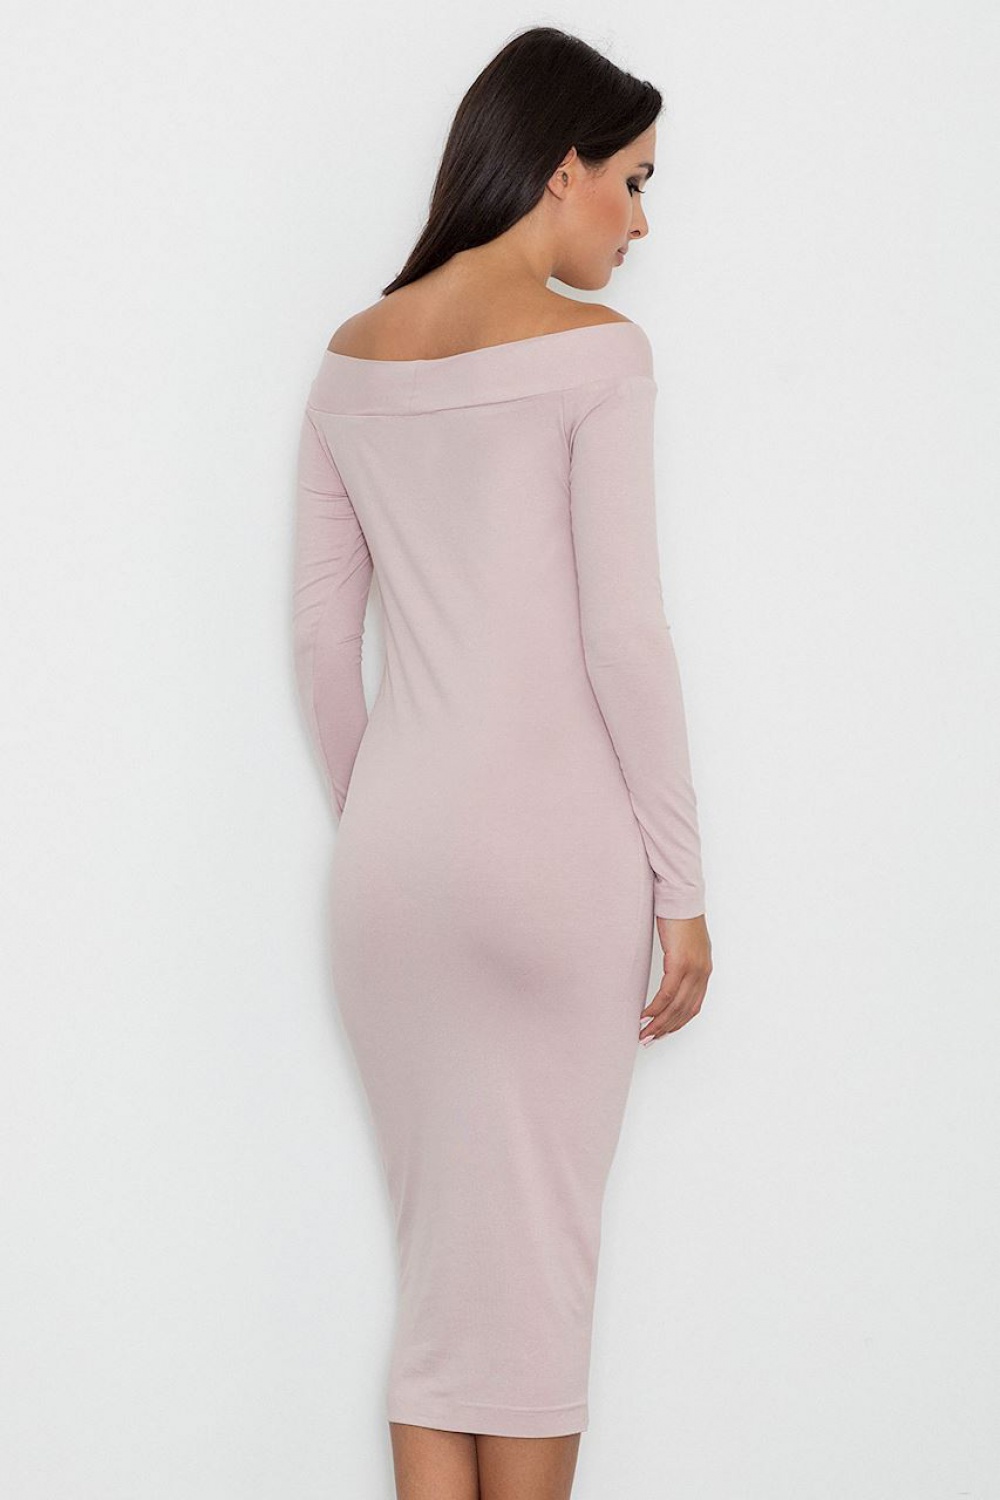  Evening dress model 111100 Figl  pink